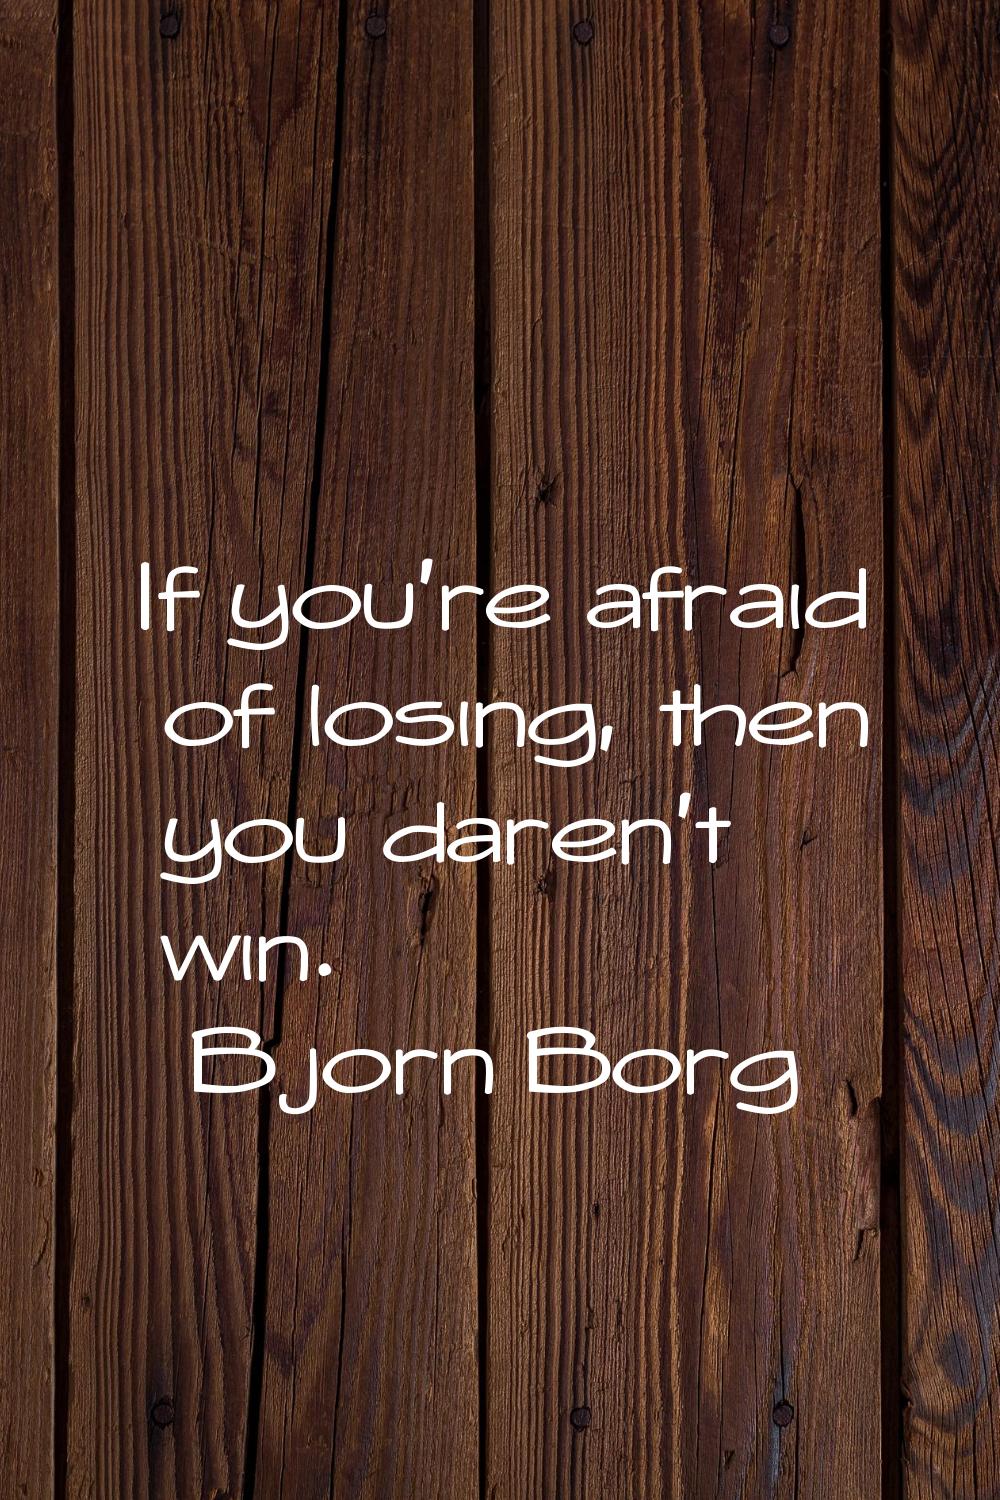 If you're afraid of losing, then you daren't win.